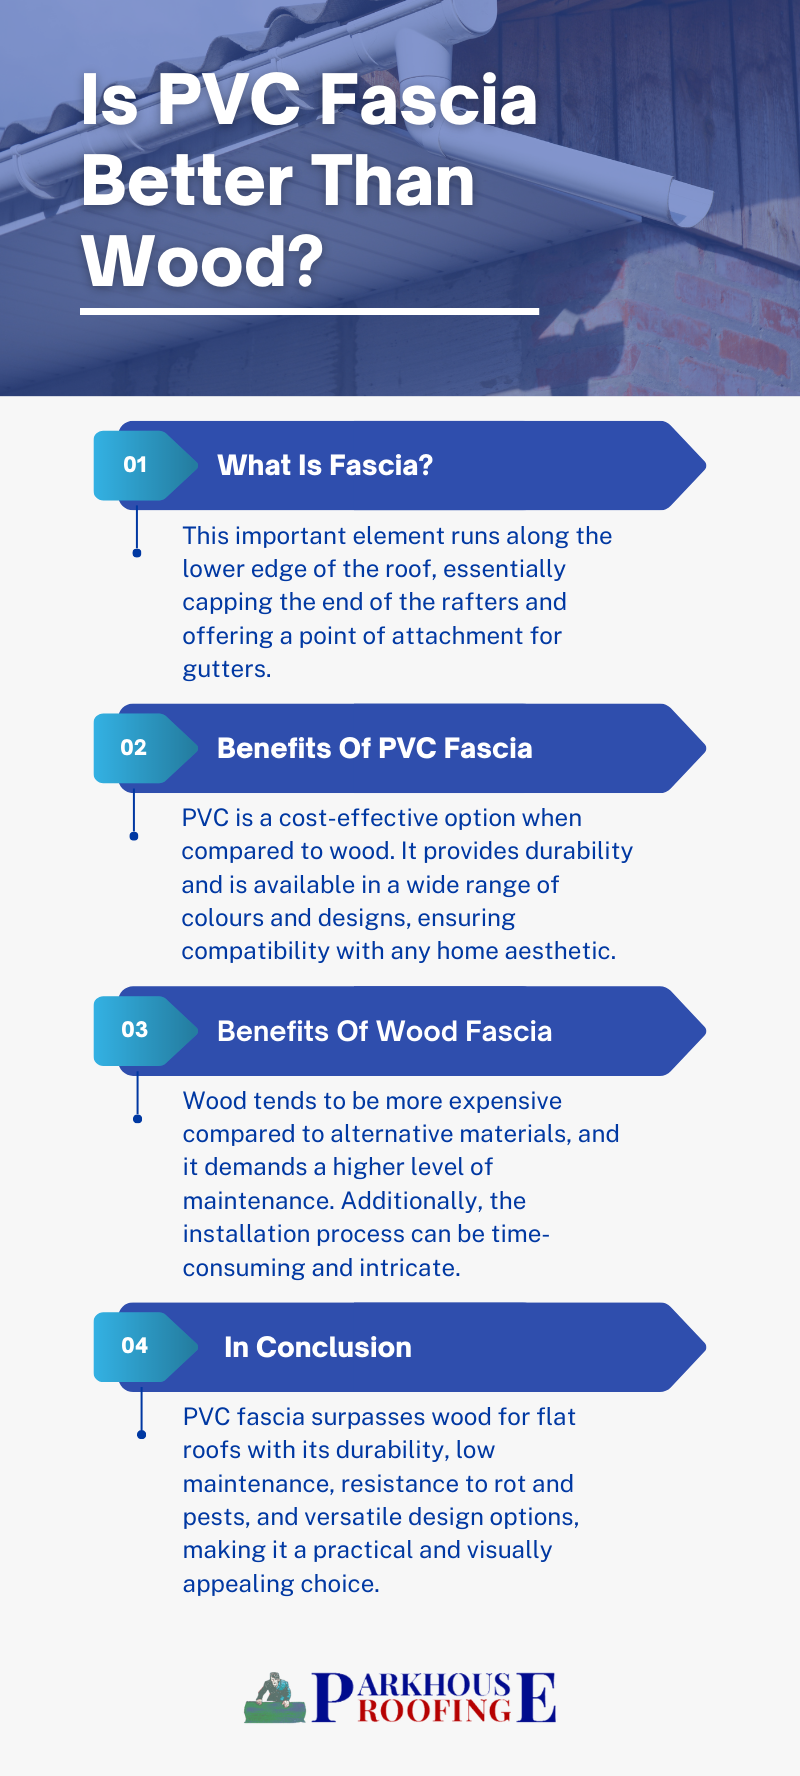 Is PVC Fascia Better Than Wood?